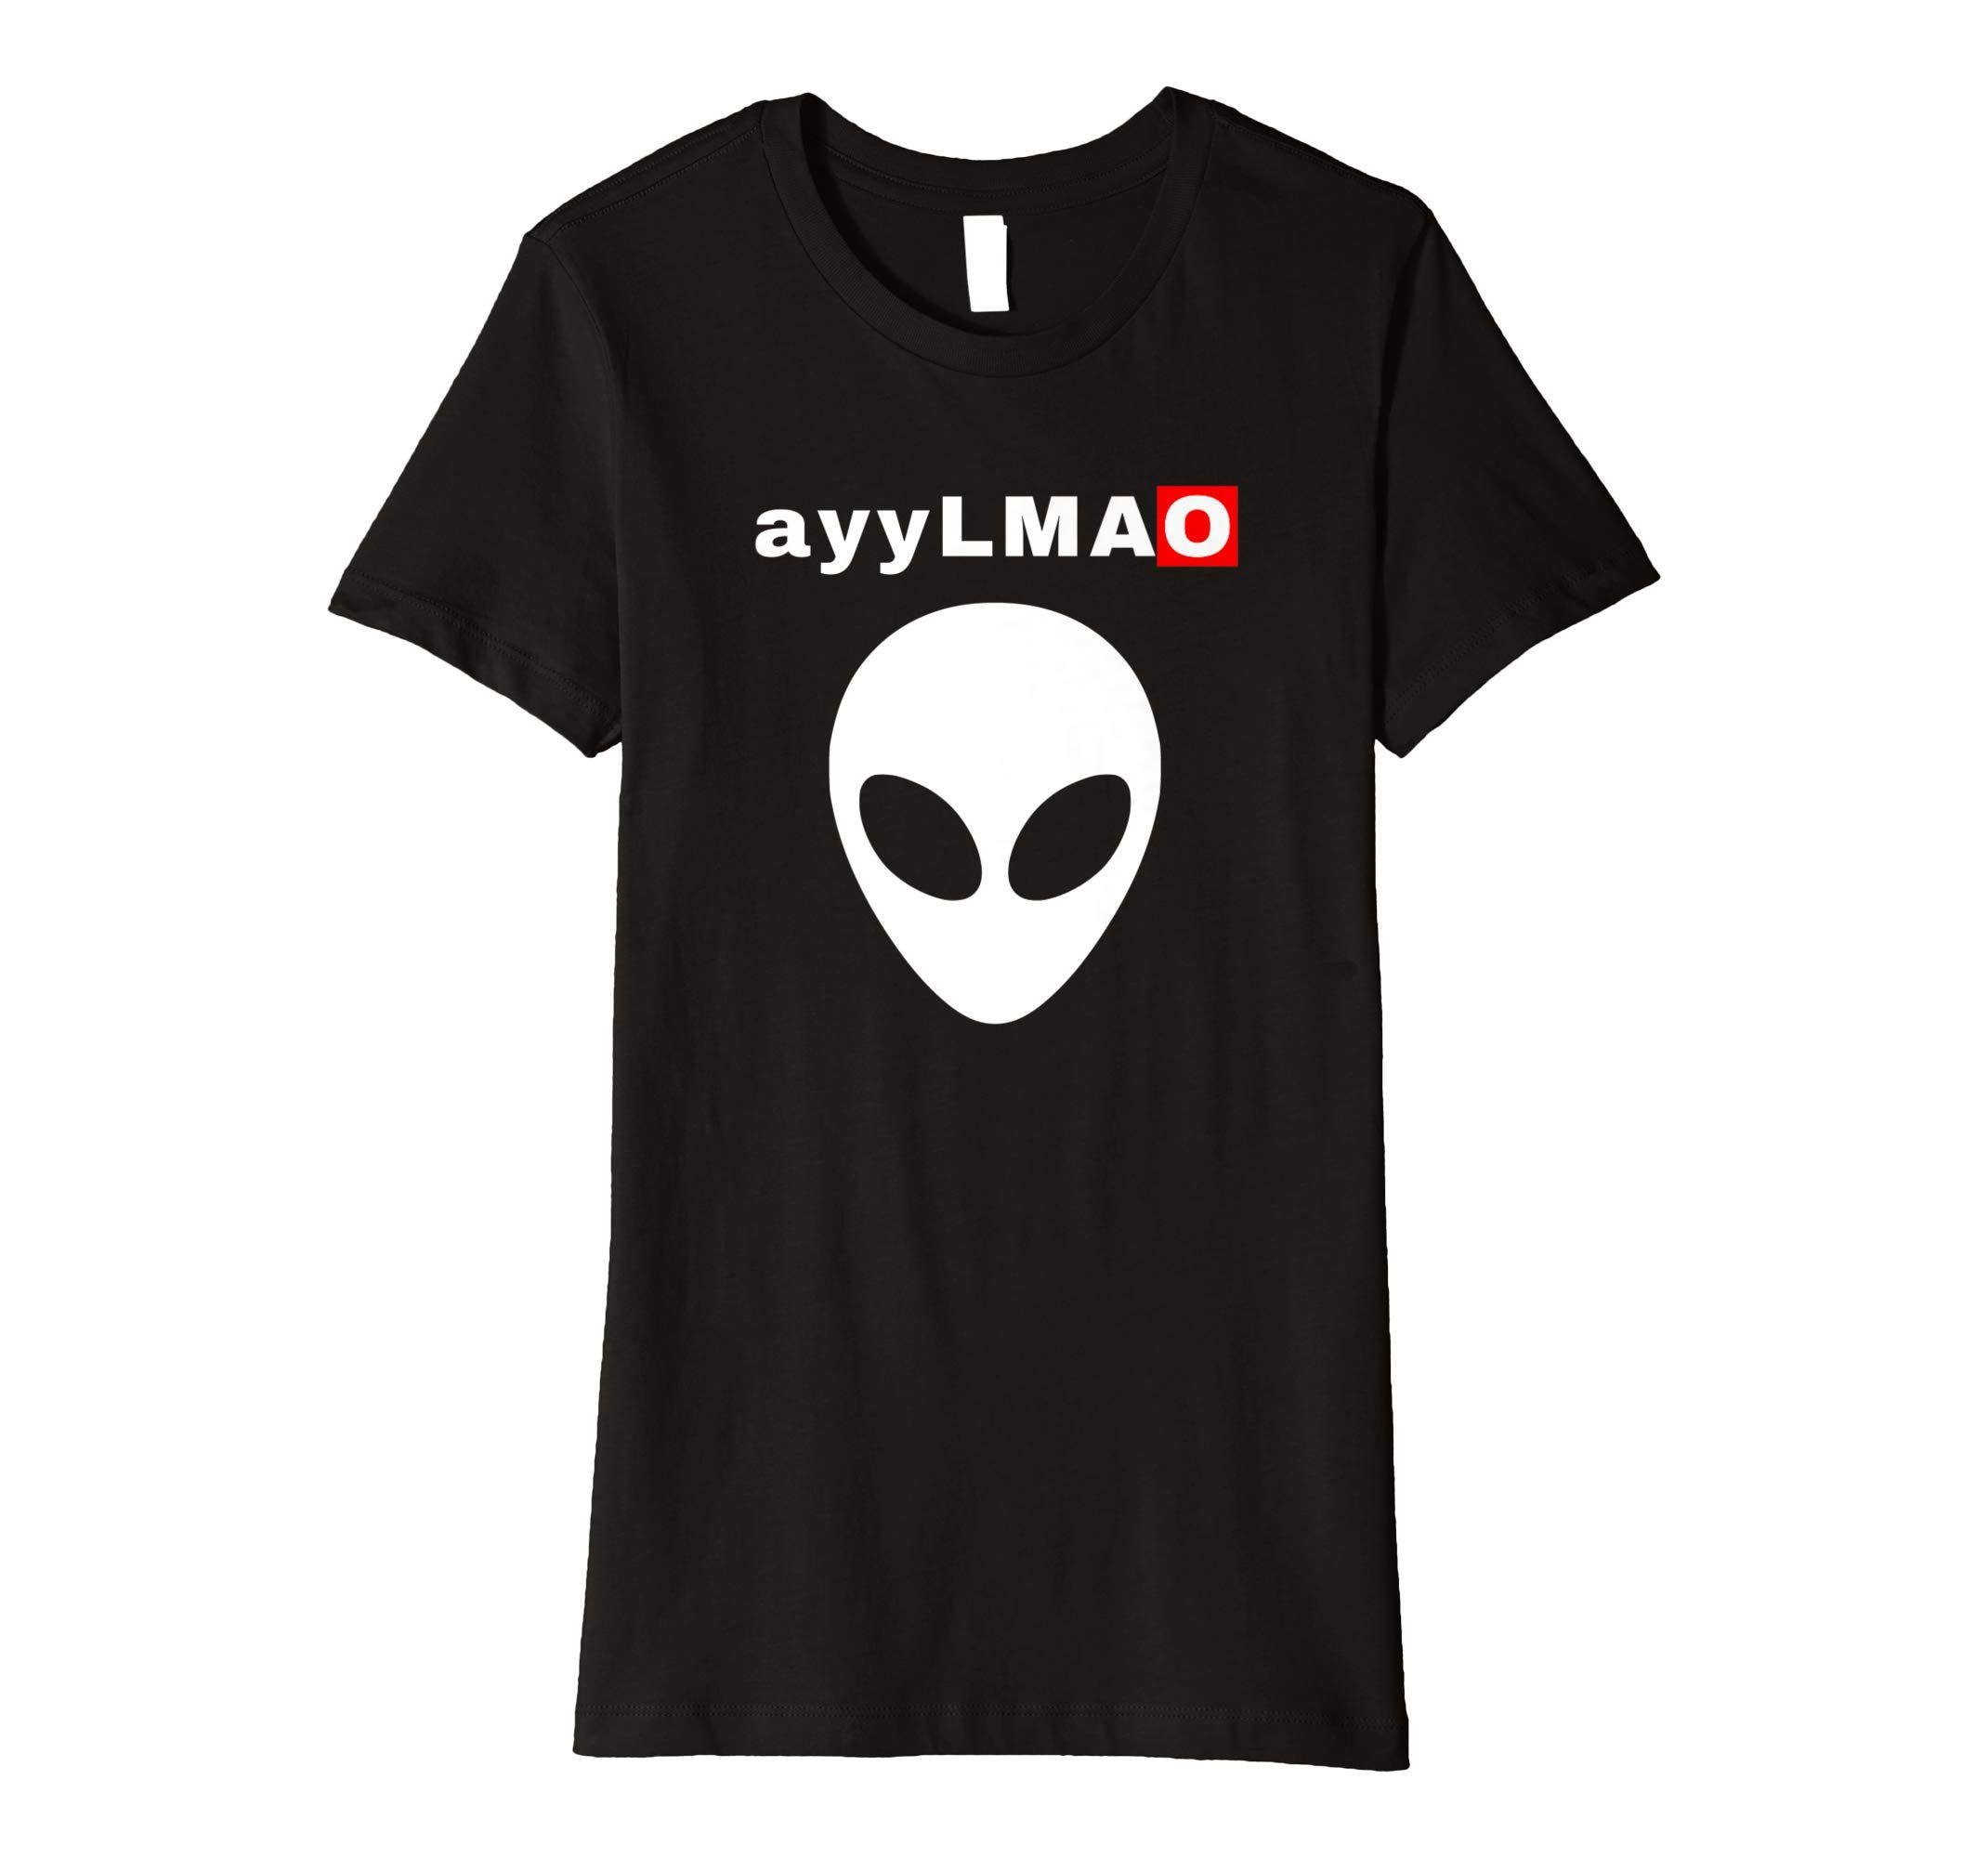 Lmao Logo - Amazon.com: ayy LMAO Alien Head Funny Meme Premium T-Shirt: Clothing